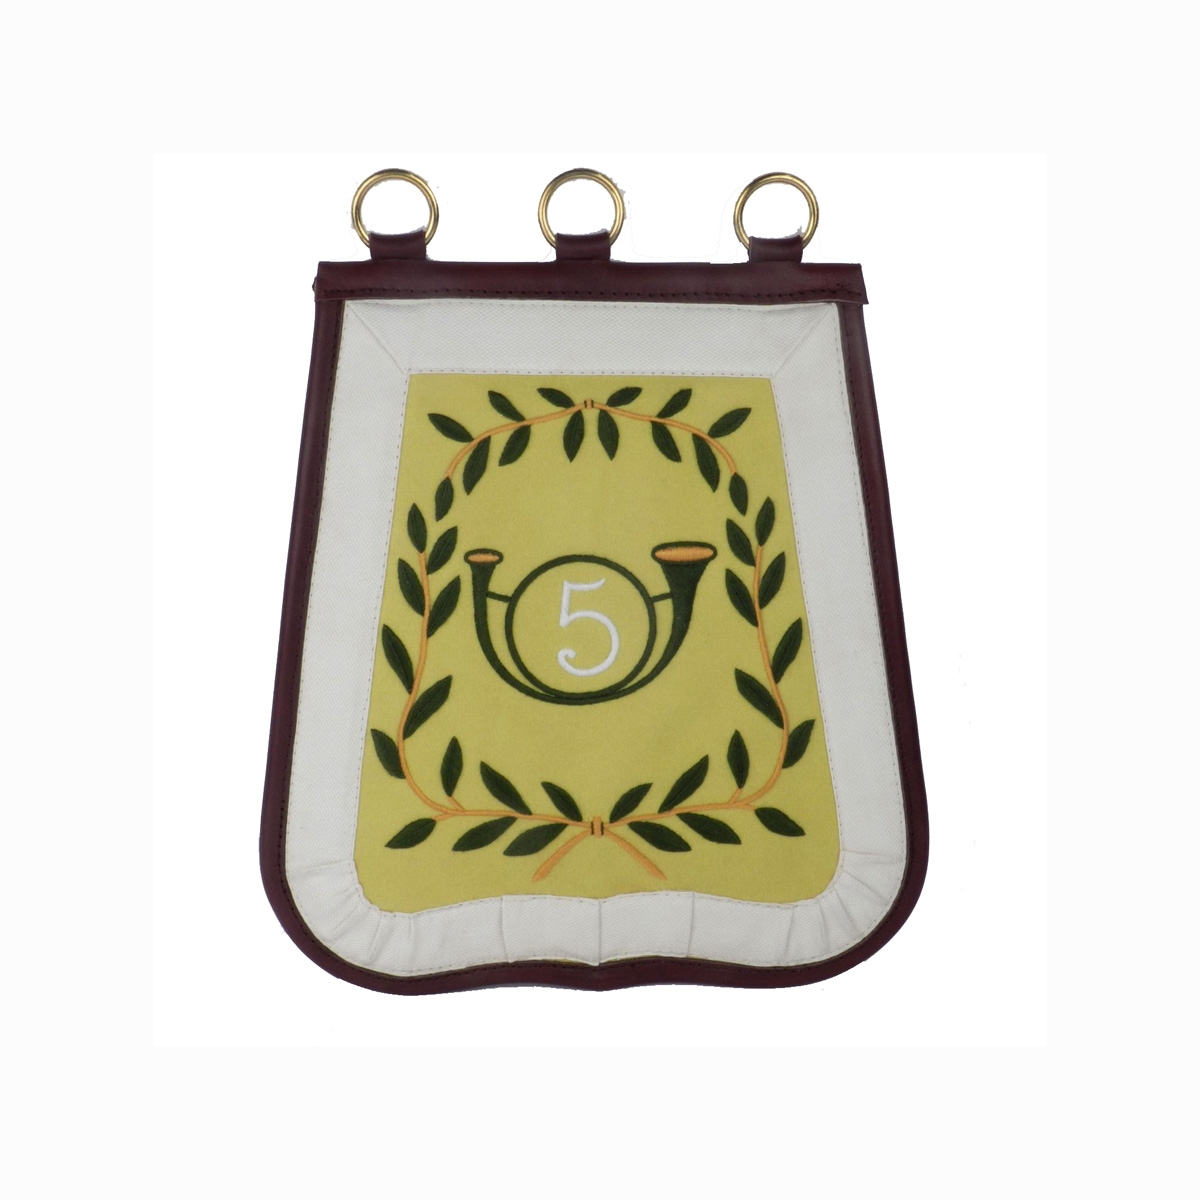 Sabretache, 5th flag handmade best quality green embroidery Emblem, Crests